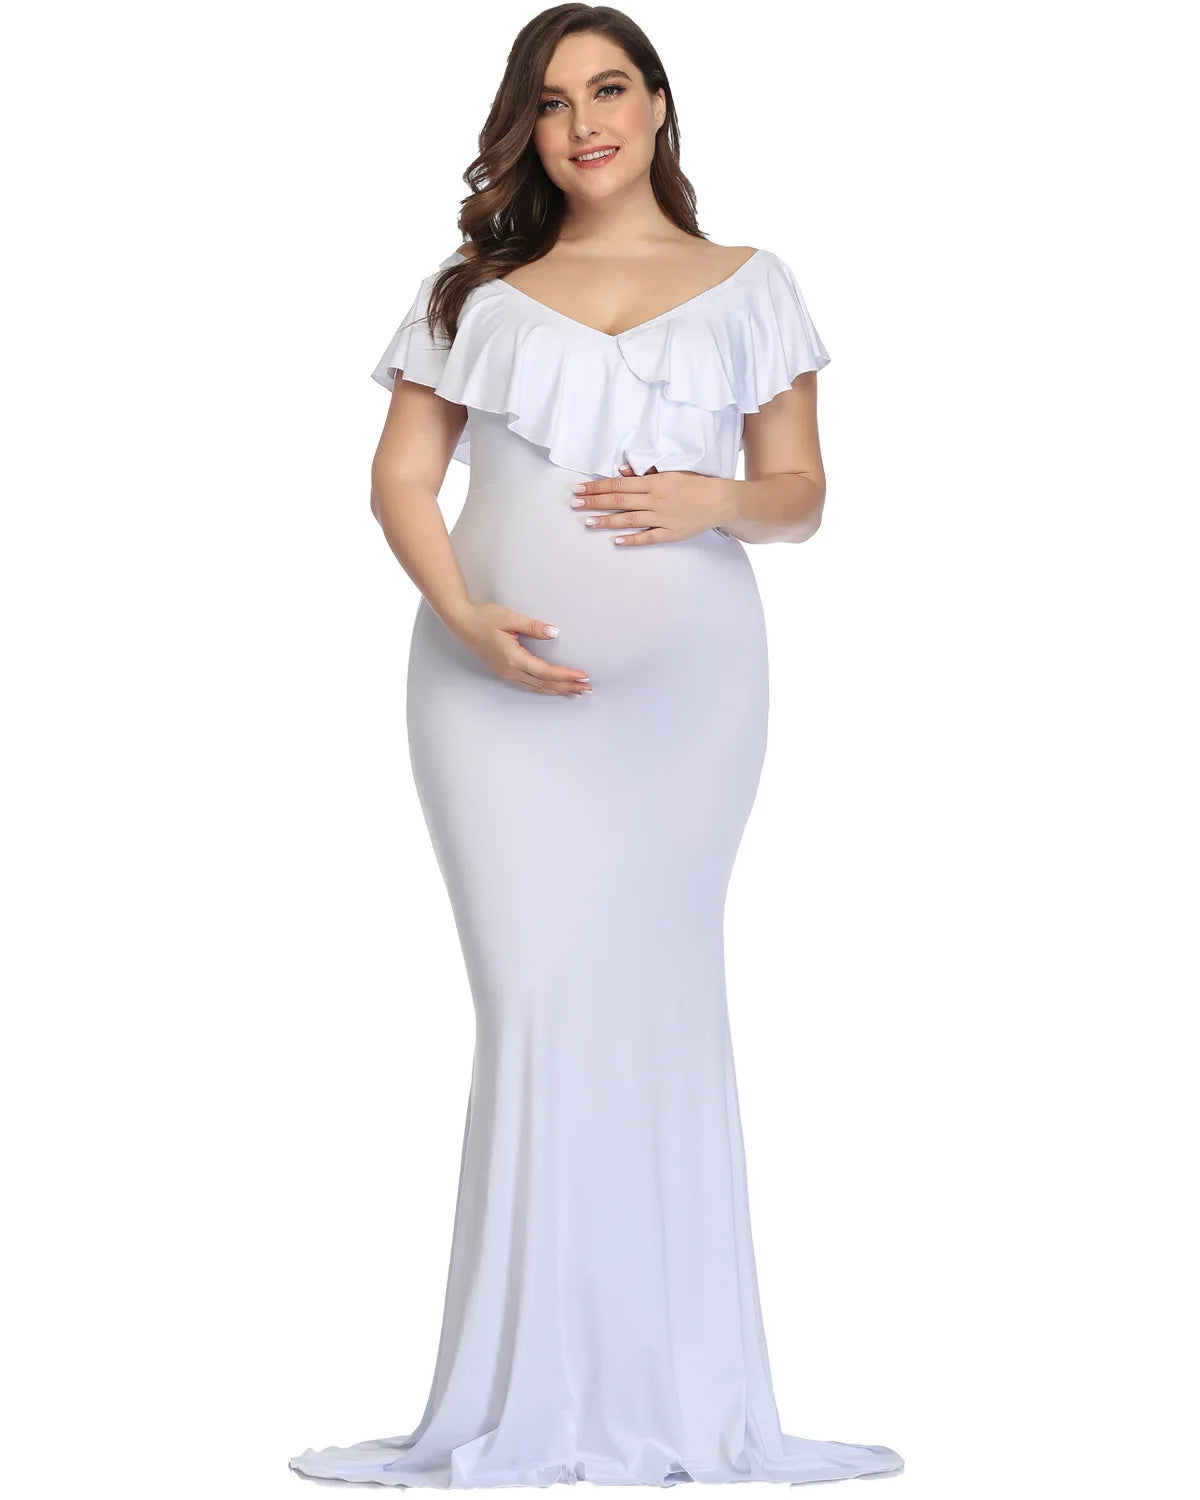 Plus Size Bohemian Maternity Photoshoot Dress white by Baby Minaj Cruz